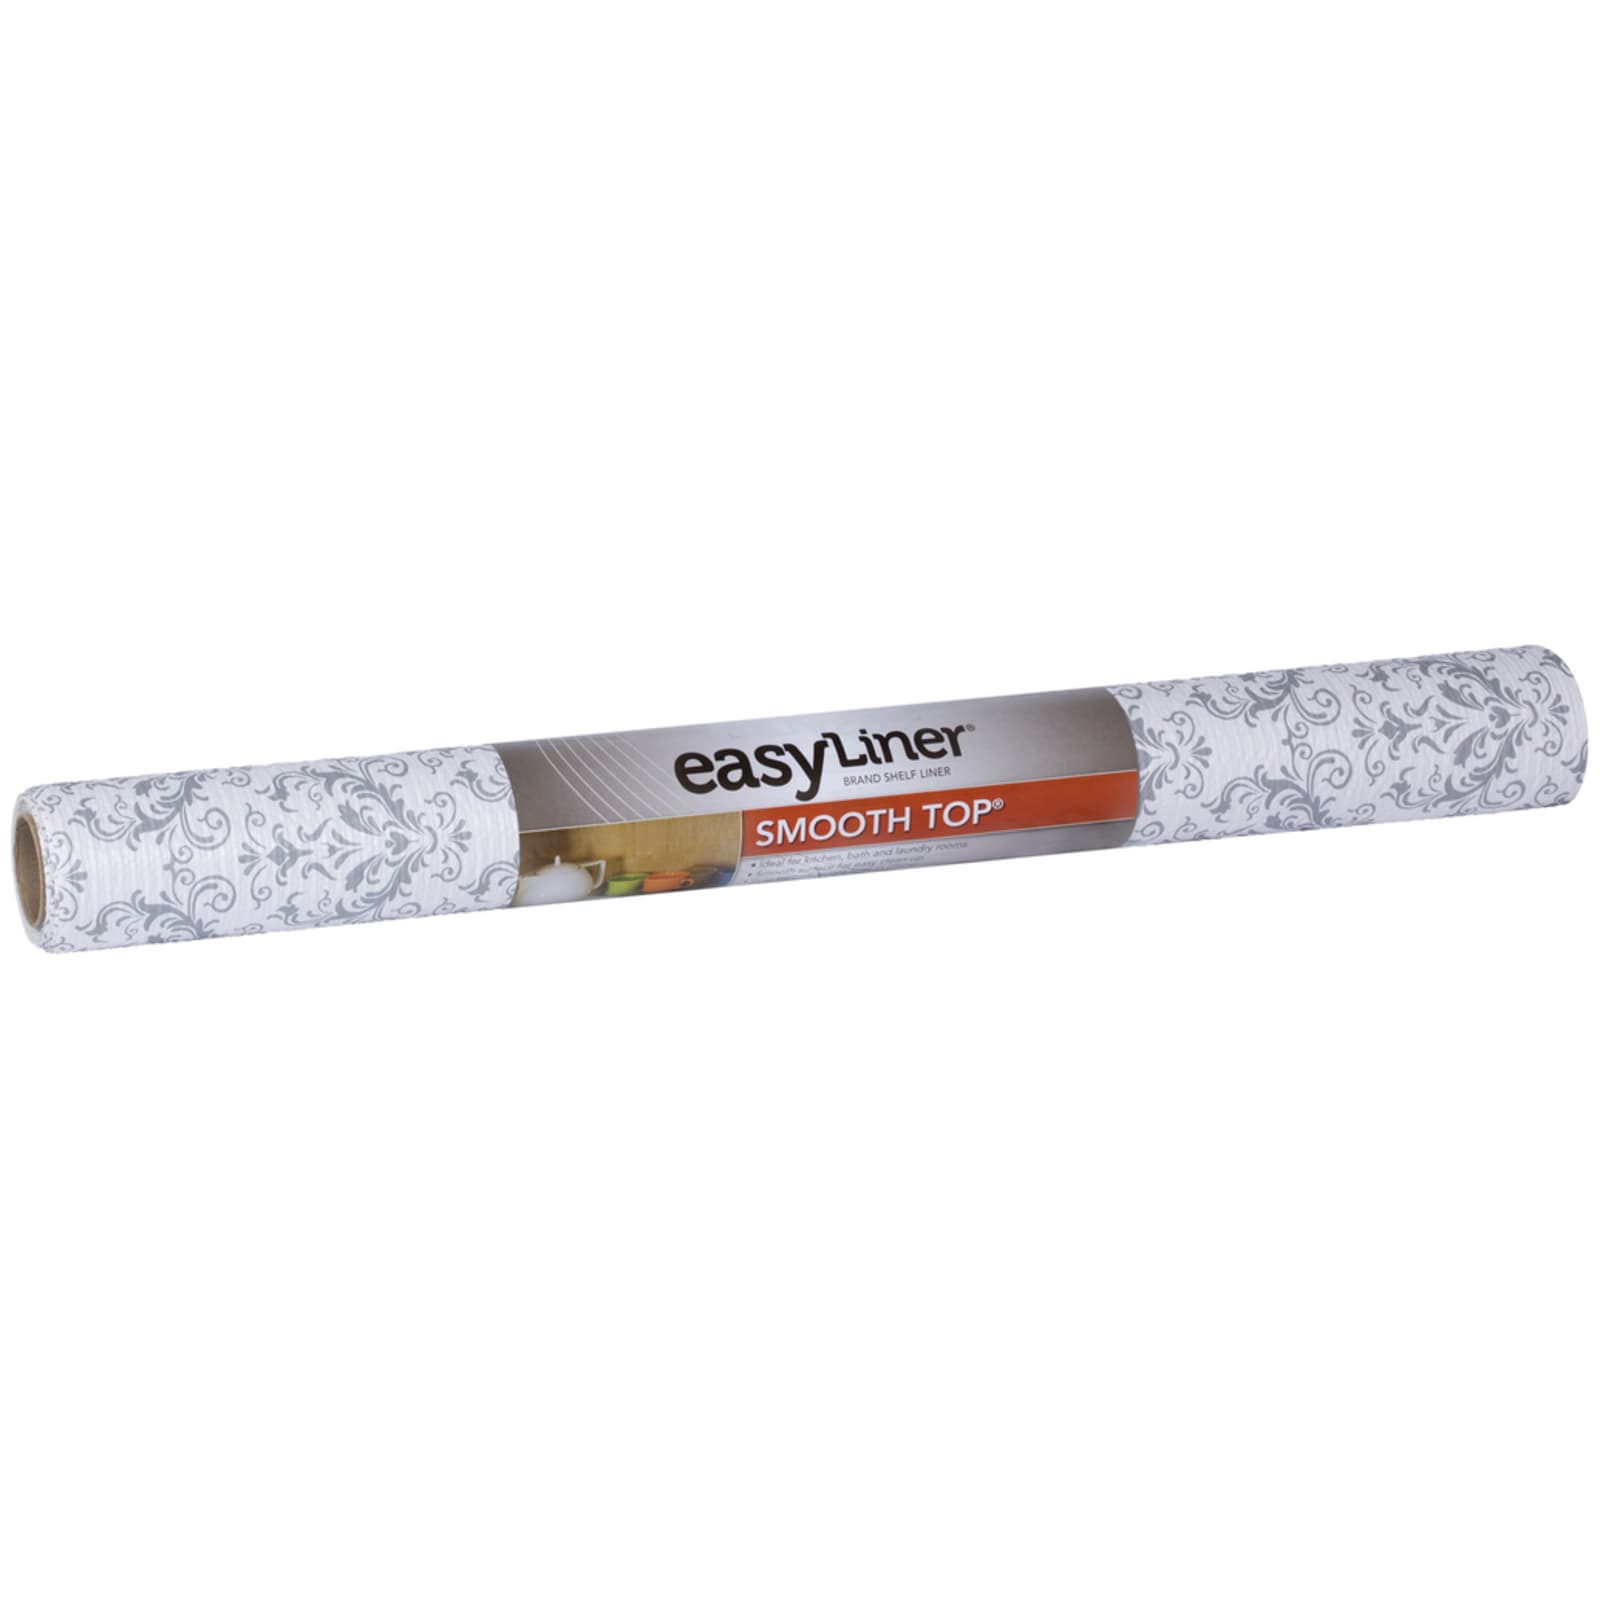 Duck Select Grip EasyLiner Brand Shelf Liner - 20 in. x 18 ft., 2